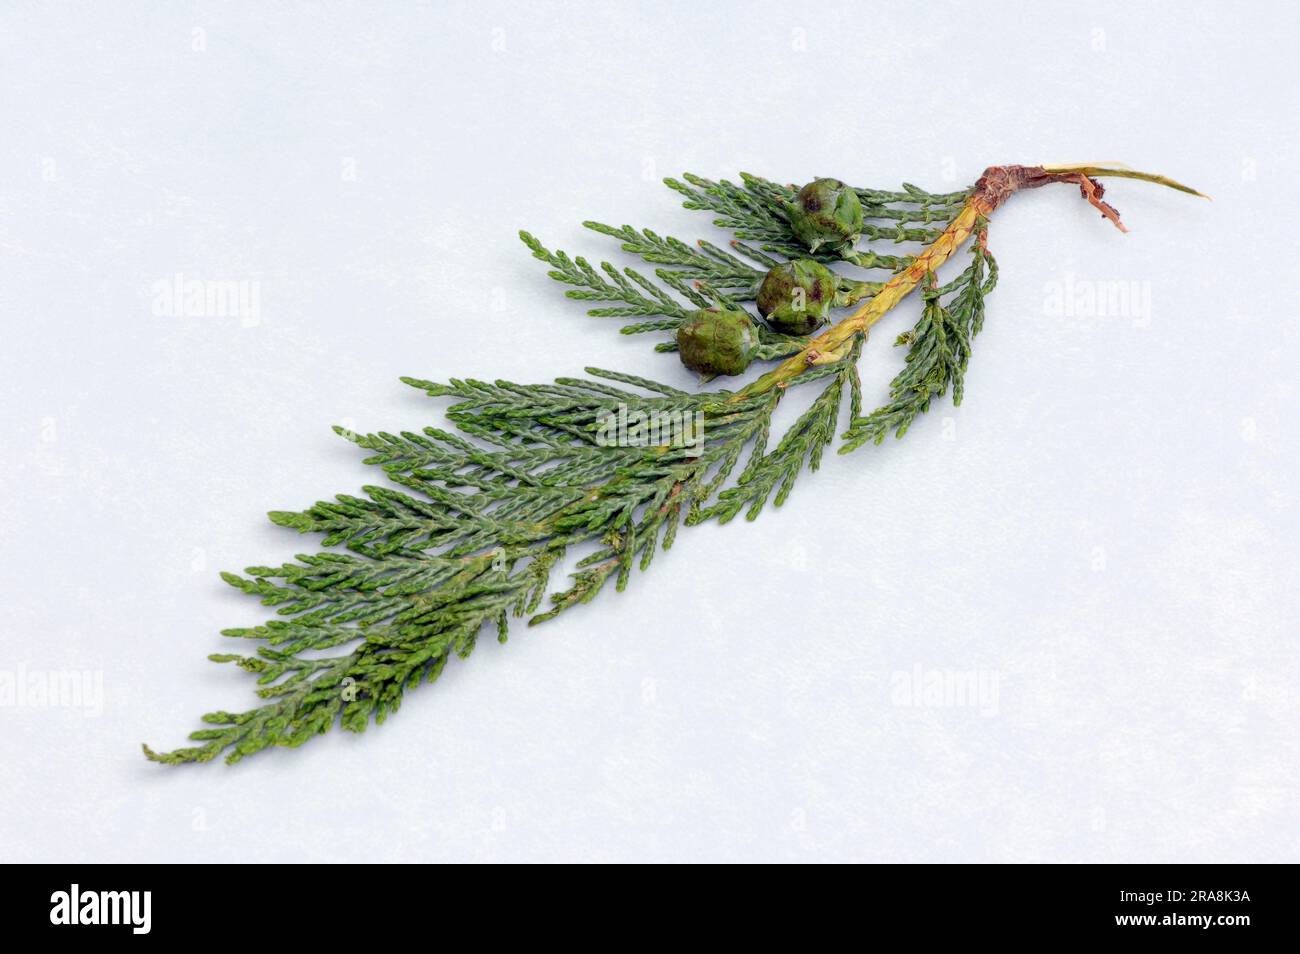 Lawson cypress (Chamaecyparis lawsoniana), branch with cones Stock Photo